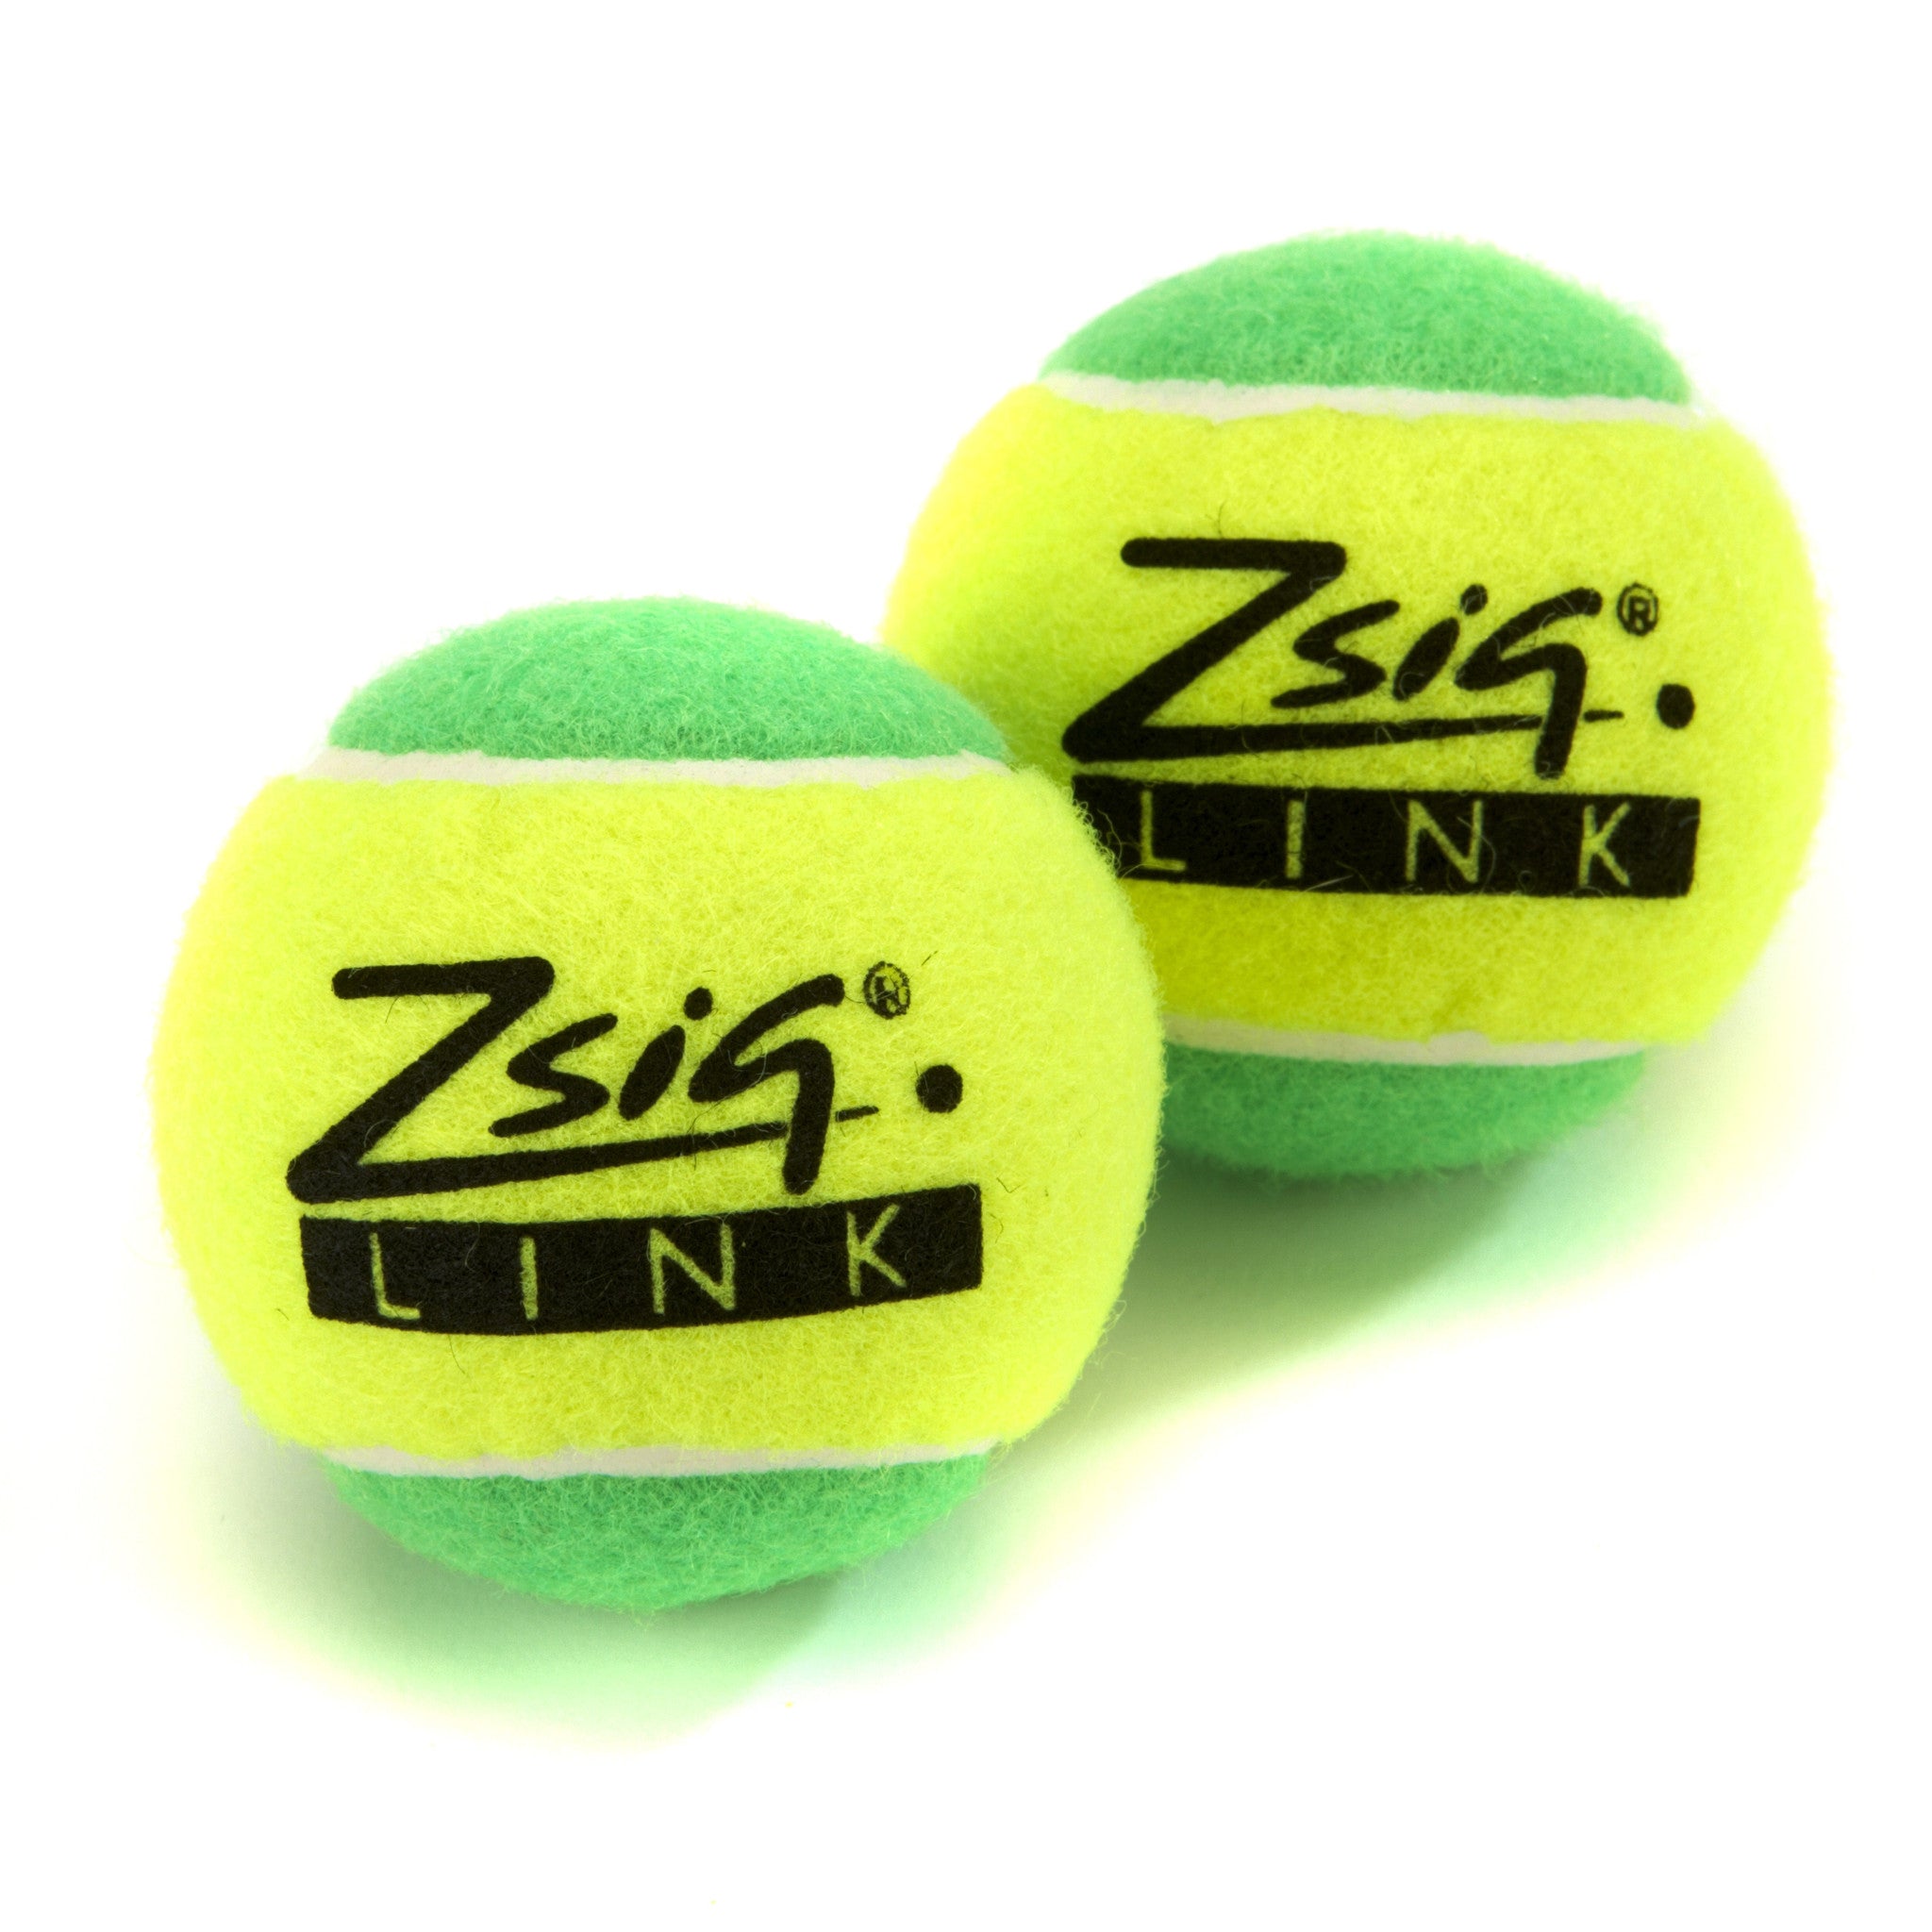 Green Mini Tennis Balls. Zsig Link Green two balls.